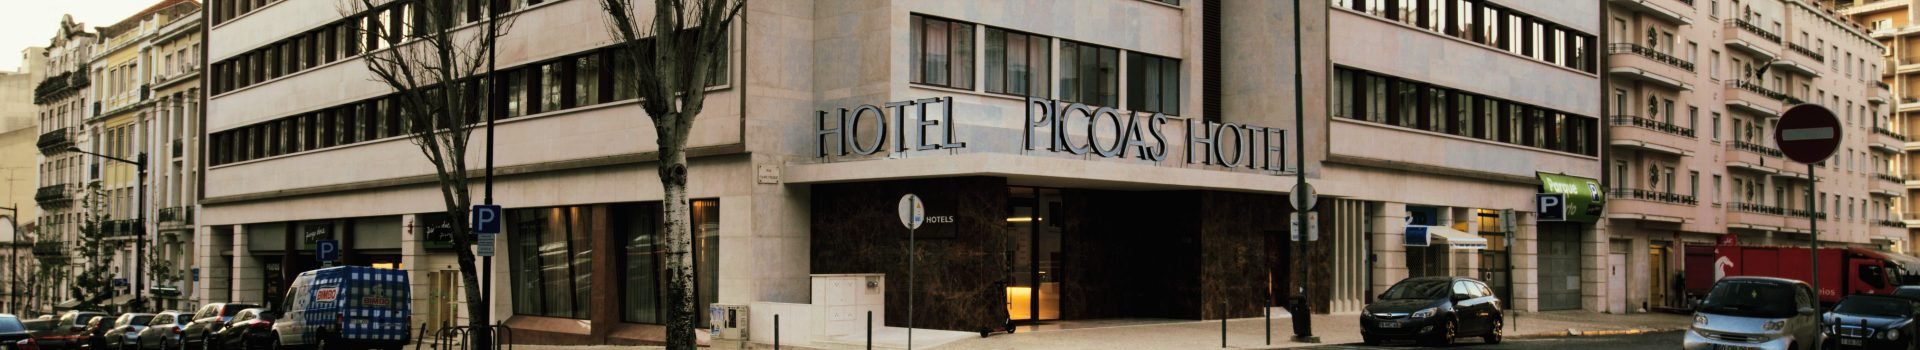  VIP Executive Picoas Hotel Lisbon